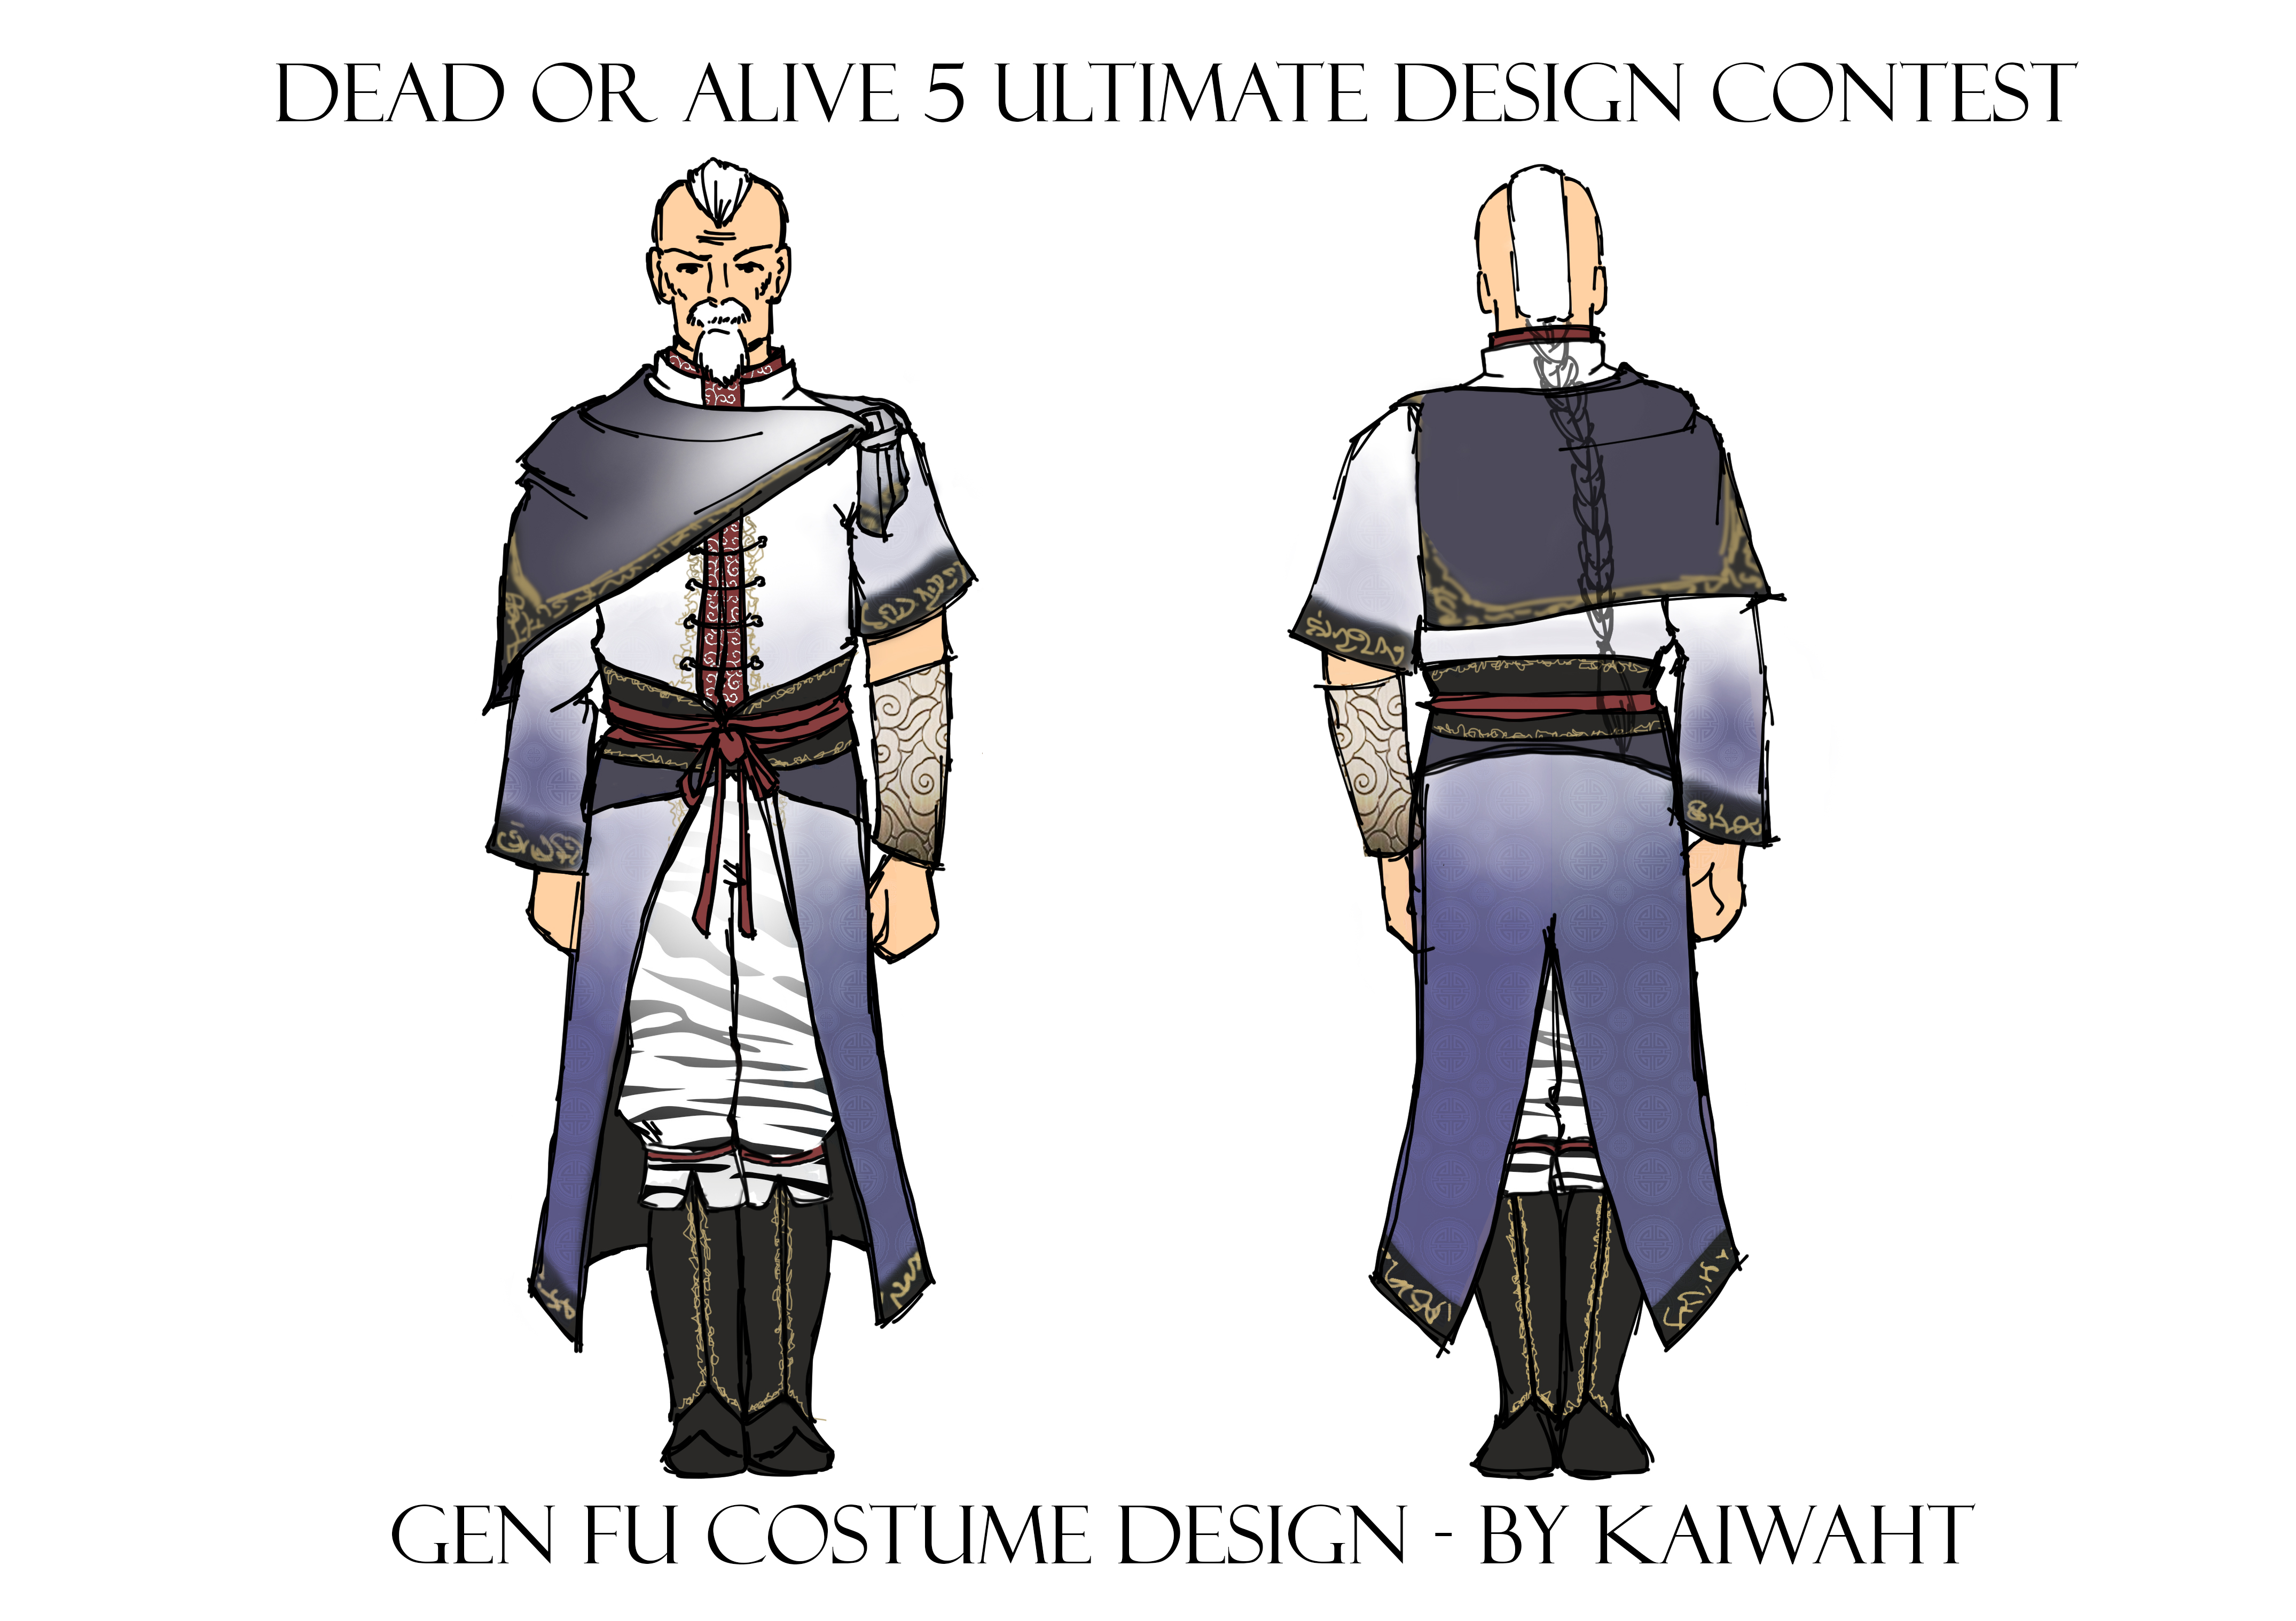 gen-fu-design-entry-for-doa5u-design-contest-by-kaiwaht-jpg.5345